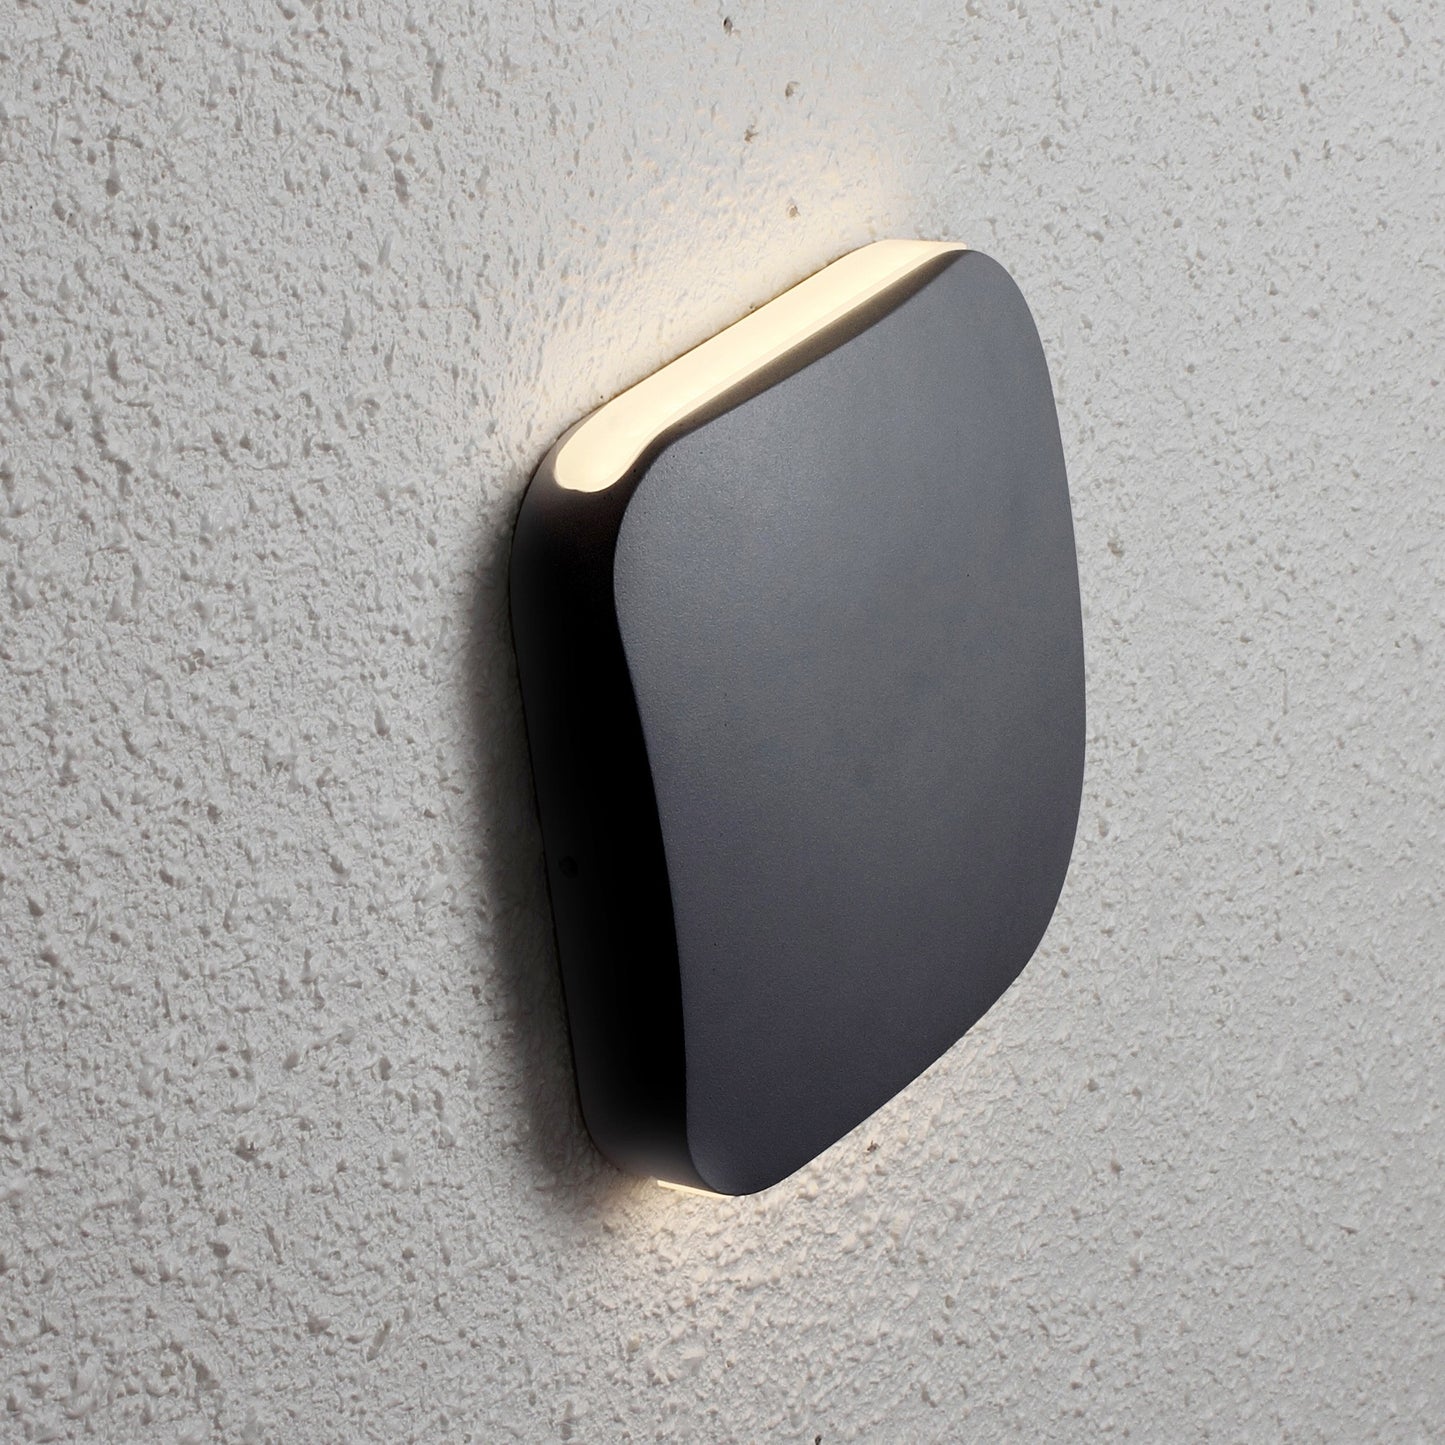 Vox IP54 Exterior Up/Down LED Wall Light, Black